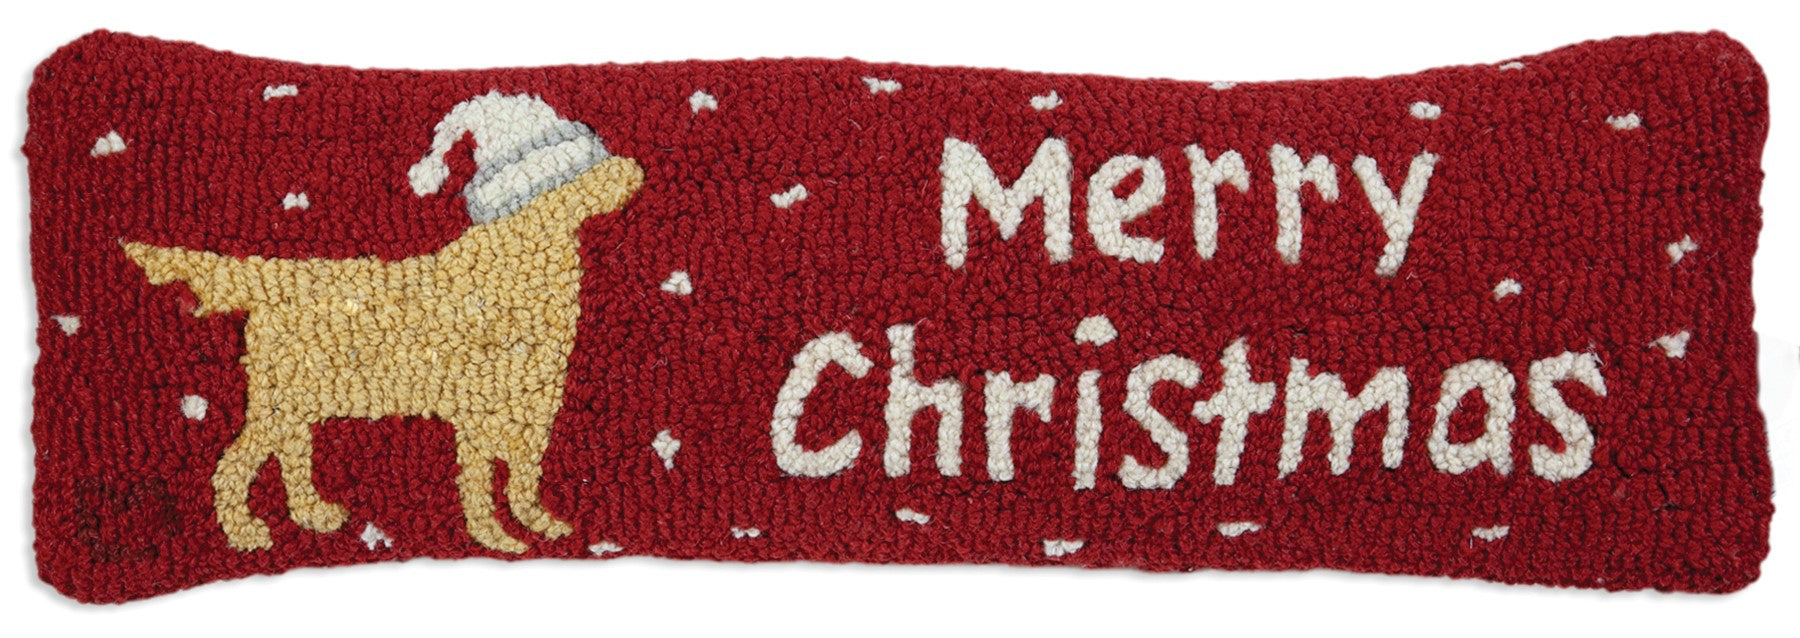 Golden Merry Christmas - Hooked Wool Pillow